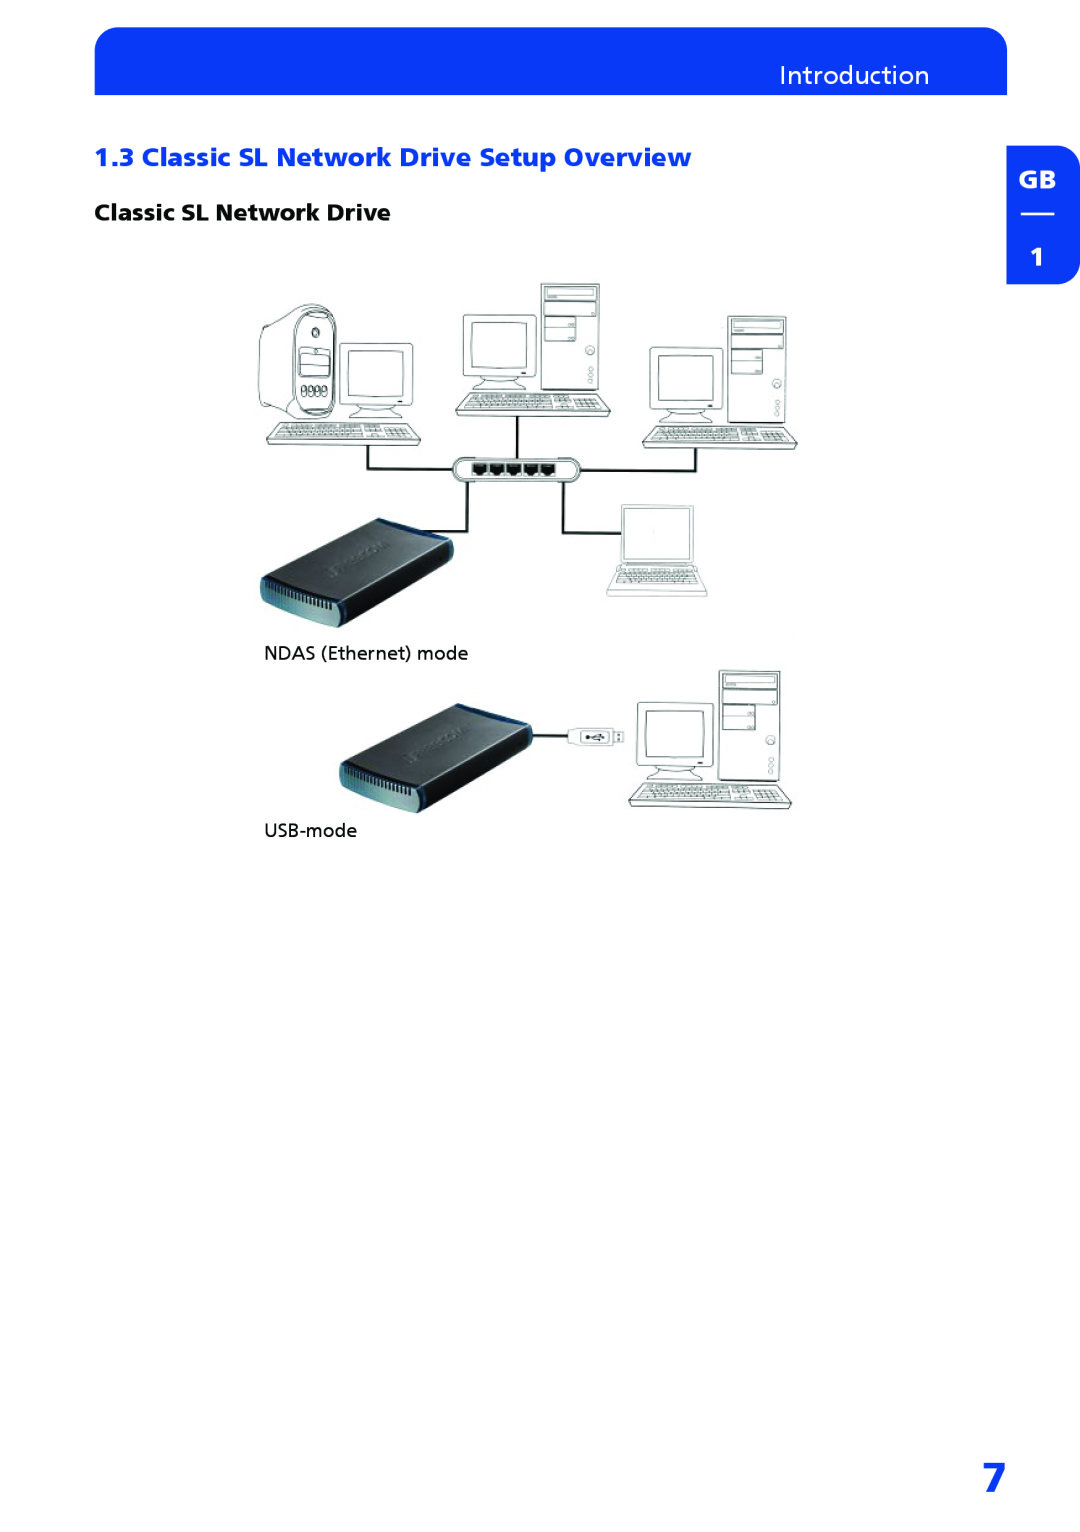 Freecom Technologies Network hard drive Introduction, Classic SL Network Drive Setup Overview, NDAS Ethernet mode USB-mode 